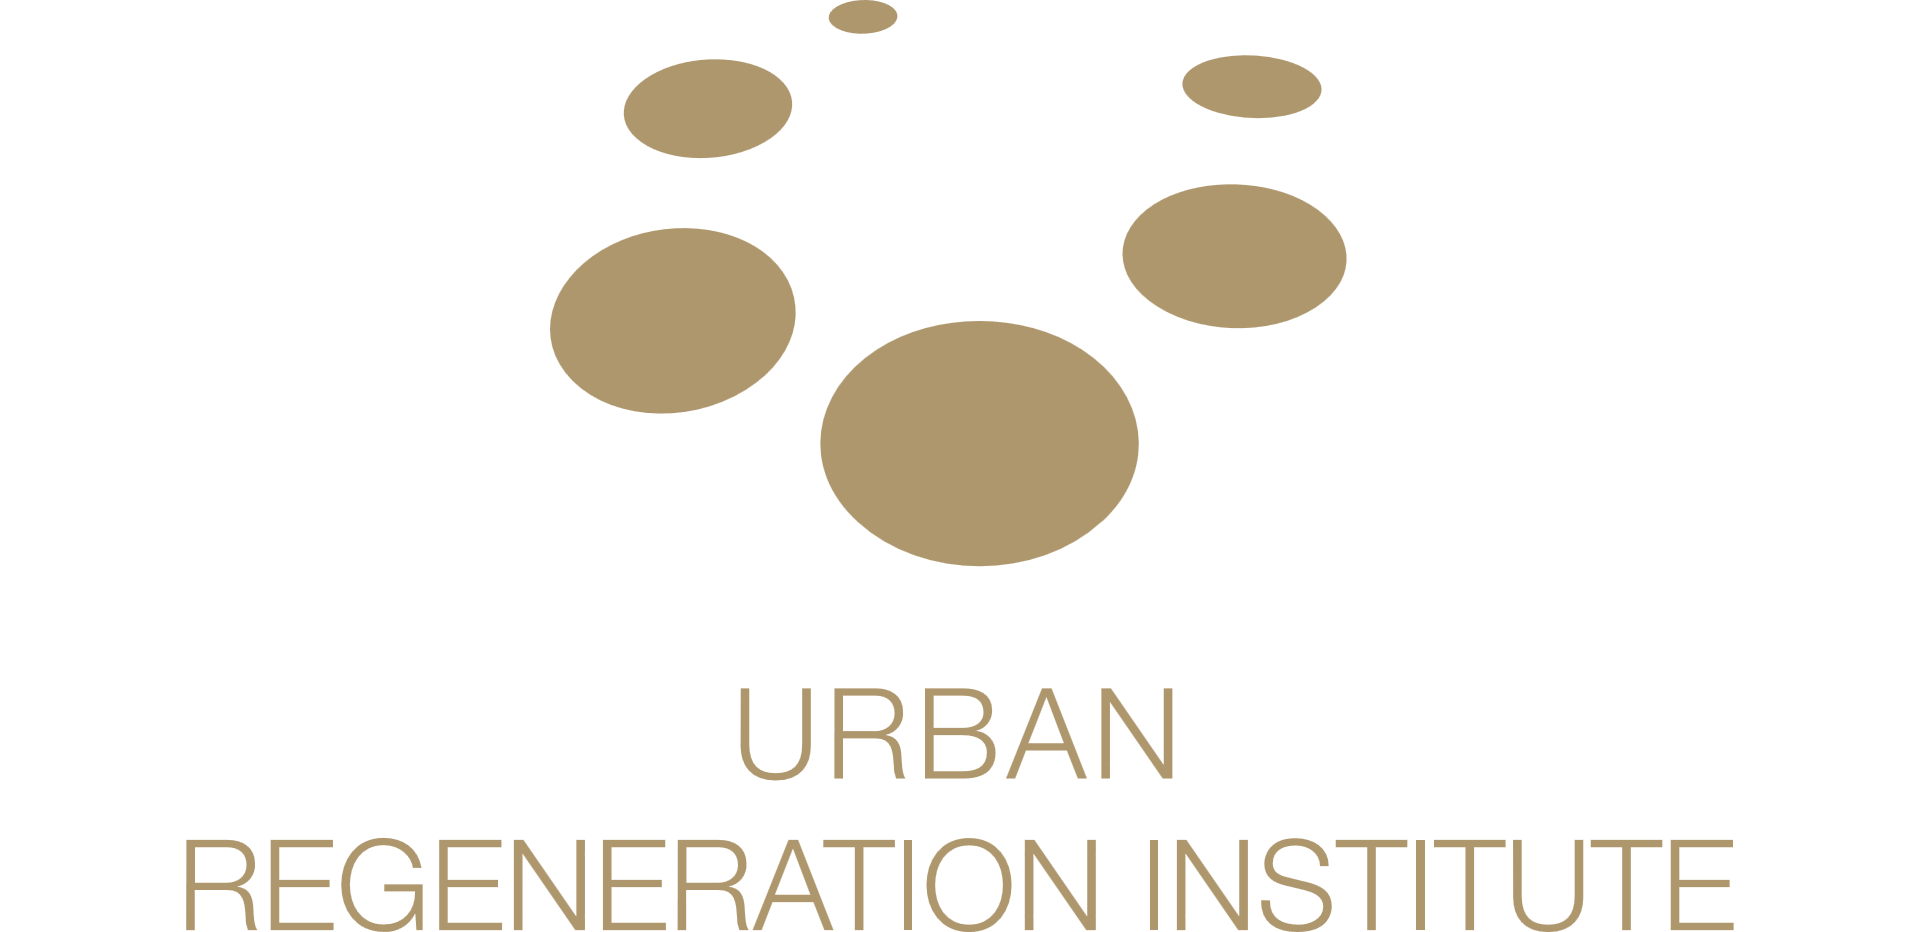 urban_regeneration_logo.png